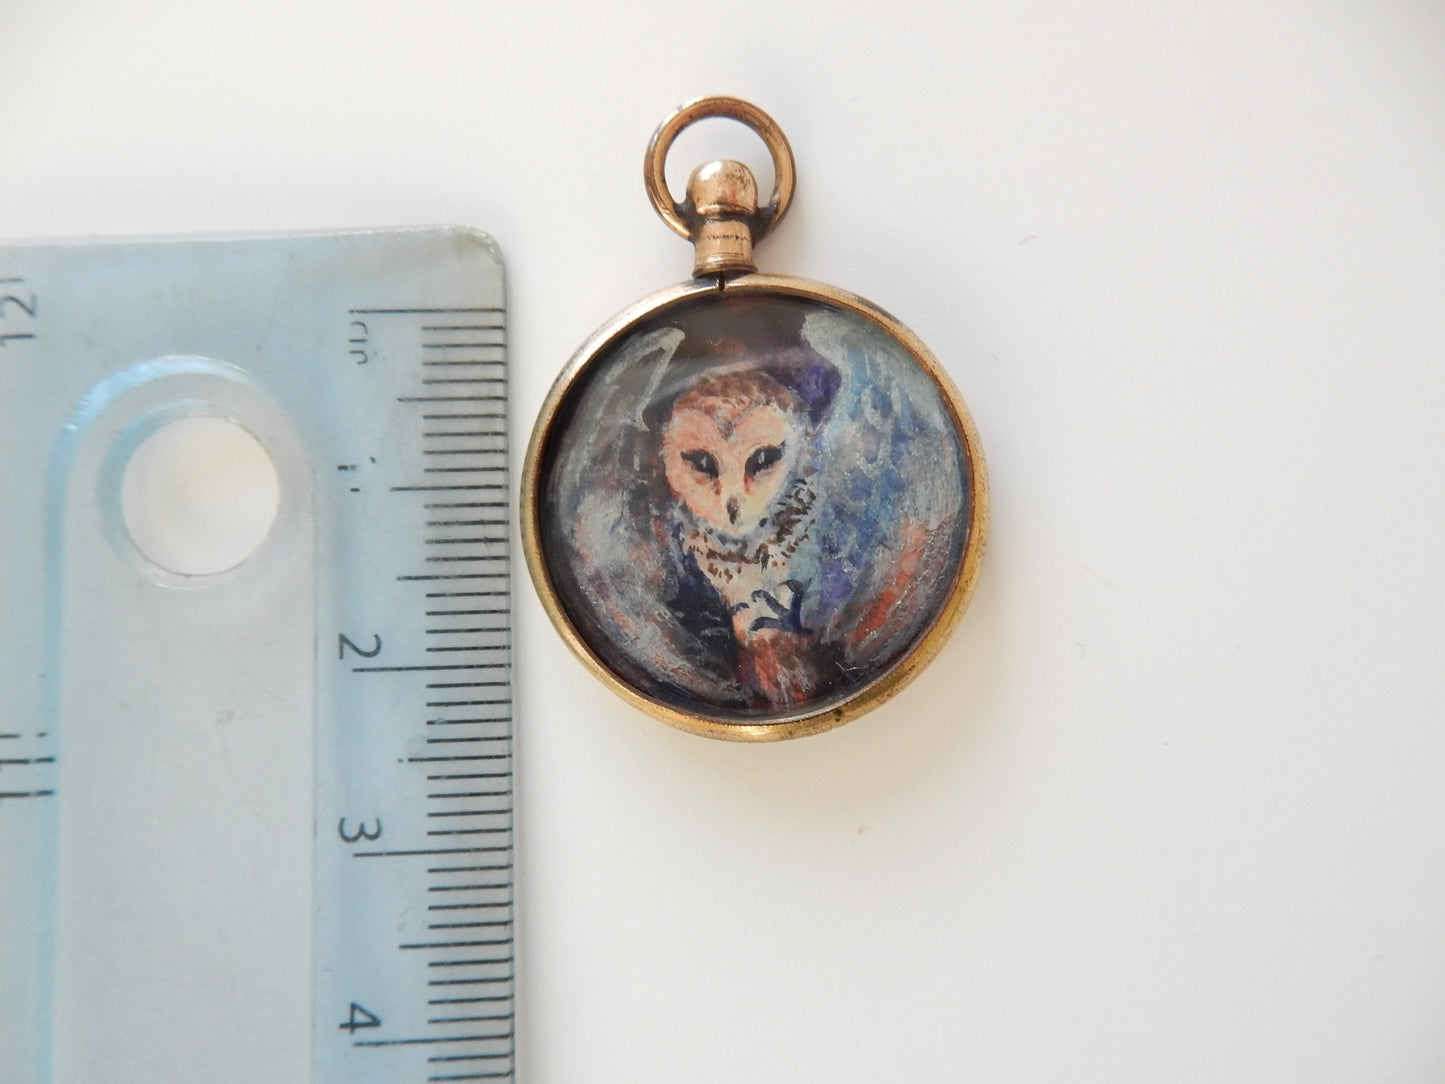 Antique Locket depicting Painted Portrait of Owl